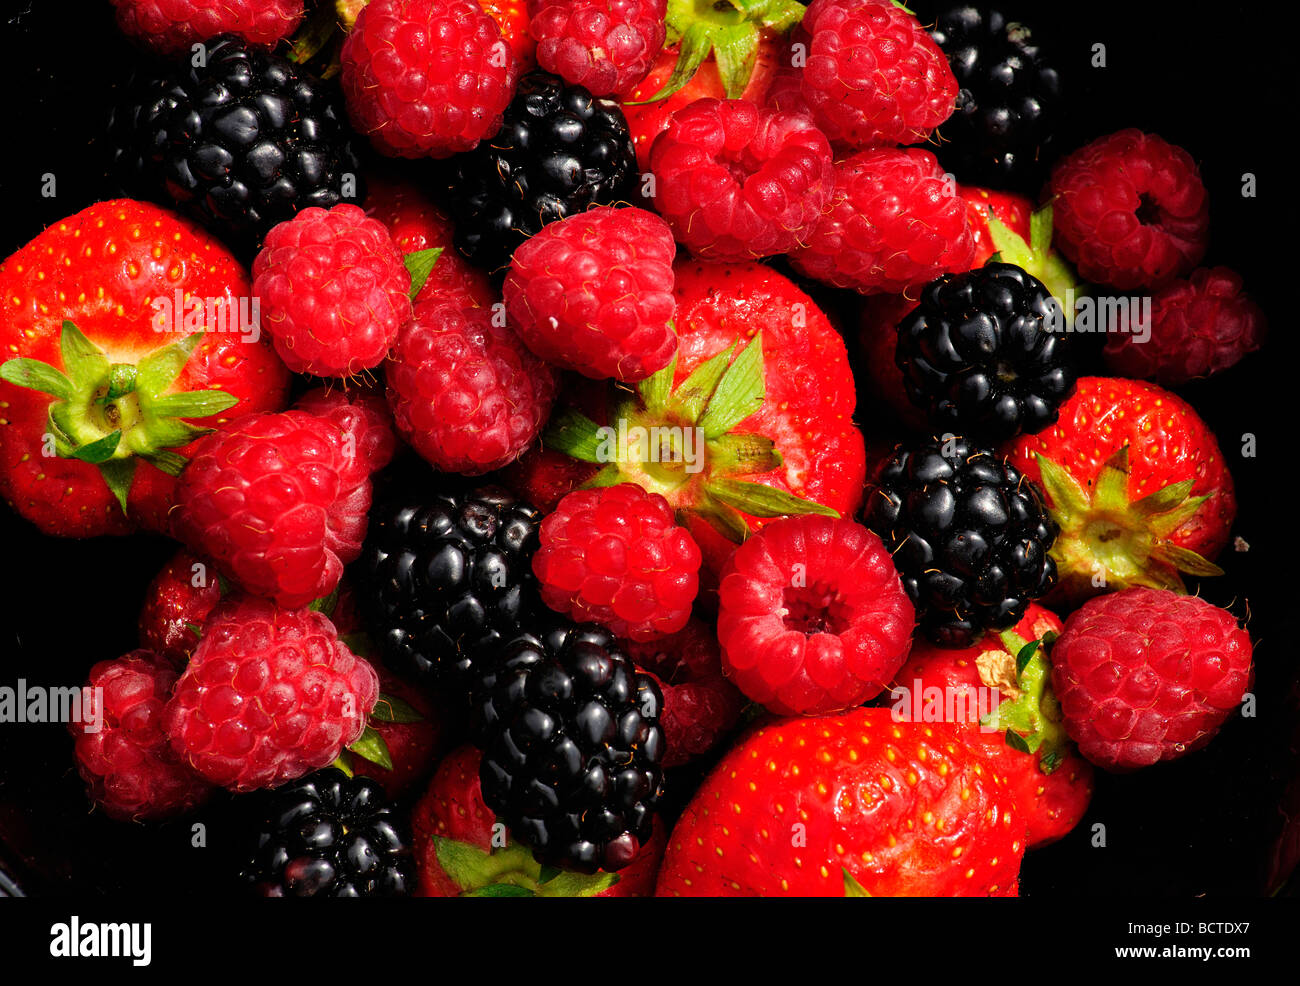 Strawberries, raspberries and blackberries Stock Photo